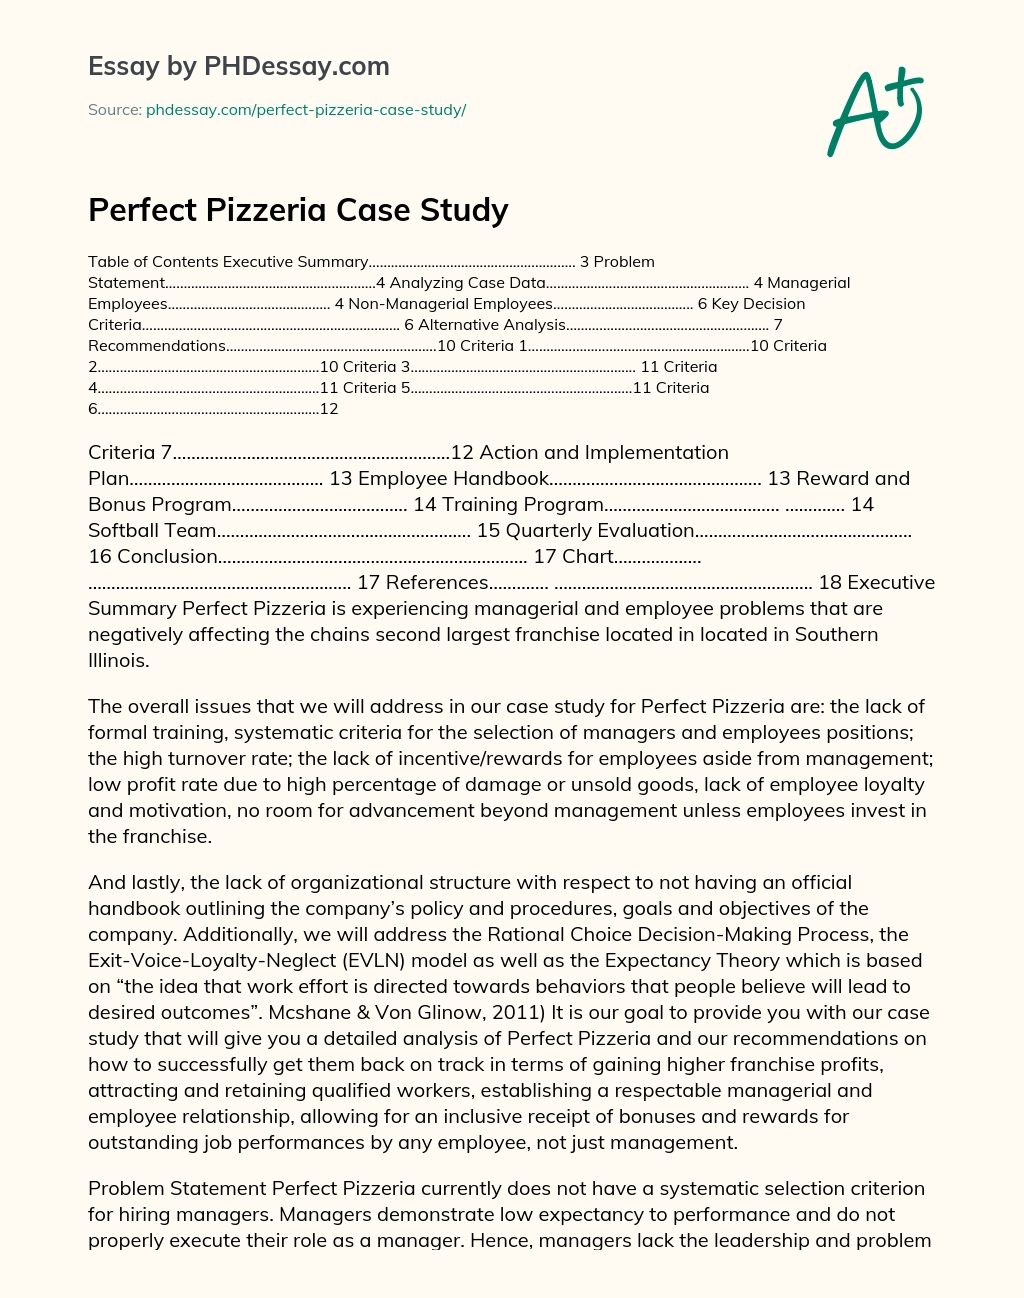 Perfect Pizzeria Case Study essay